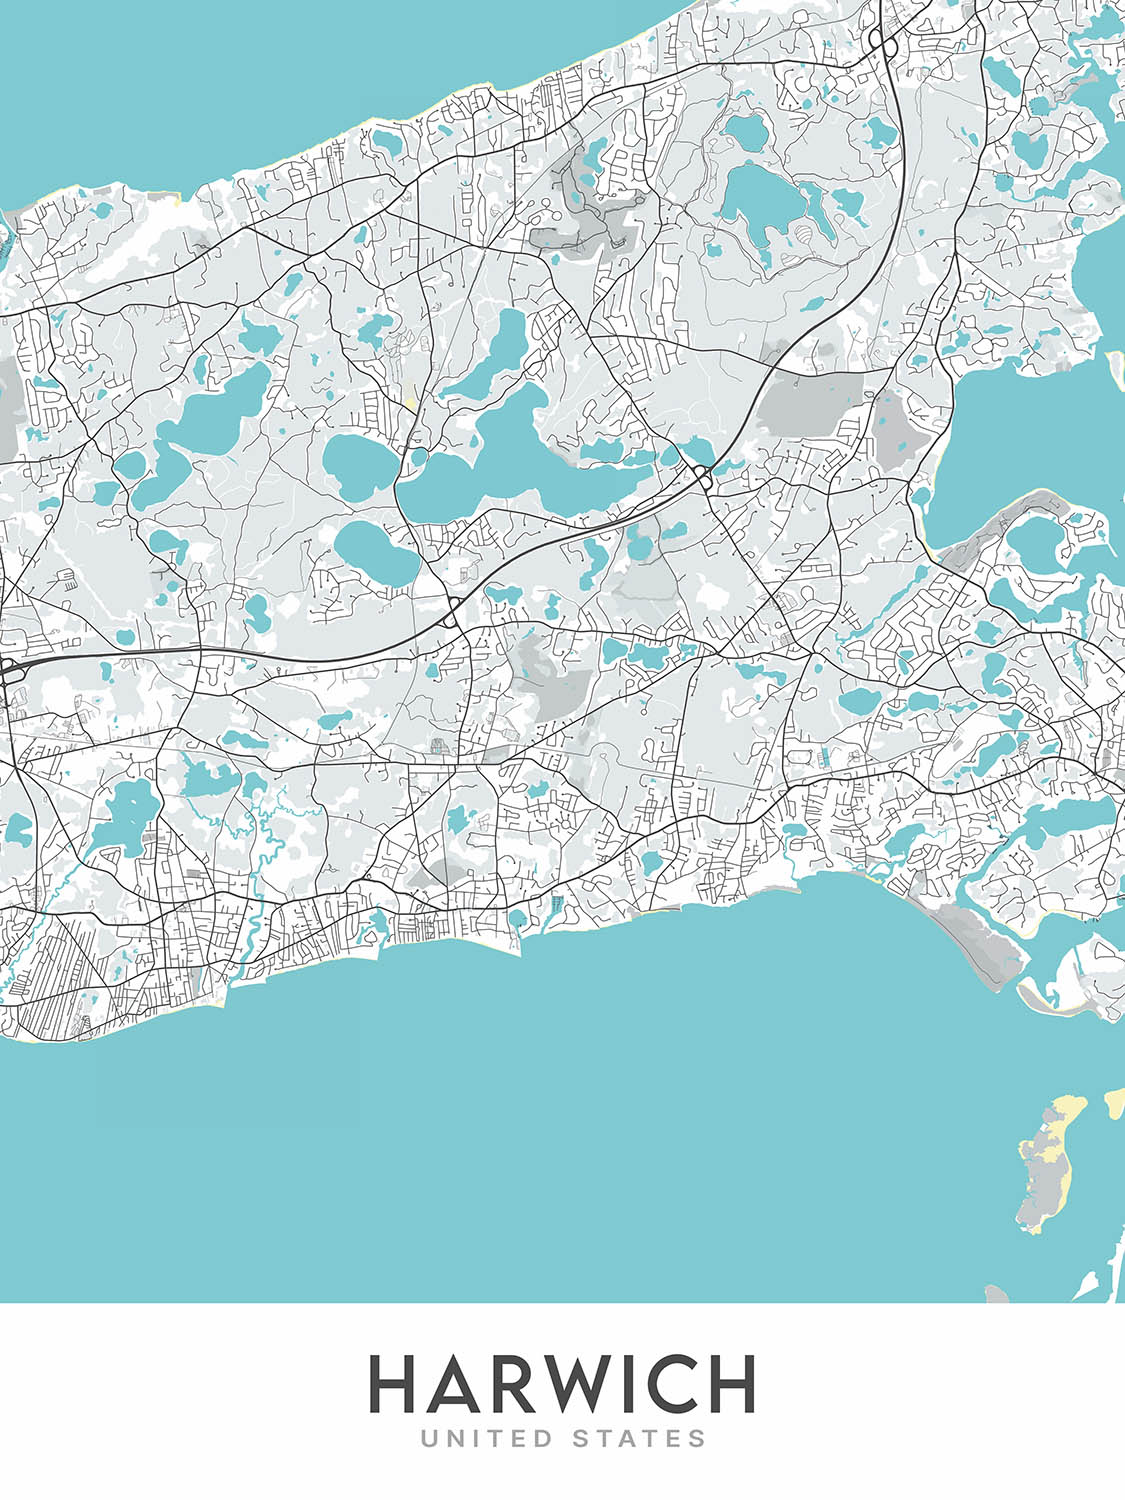 Modern City Map of Harwich, Massachusetts: Red River Beach, Saquatucket Harbor, Wychmere Harbor, Allen Harbor, Herring River